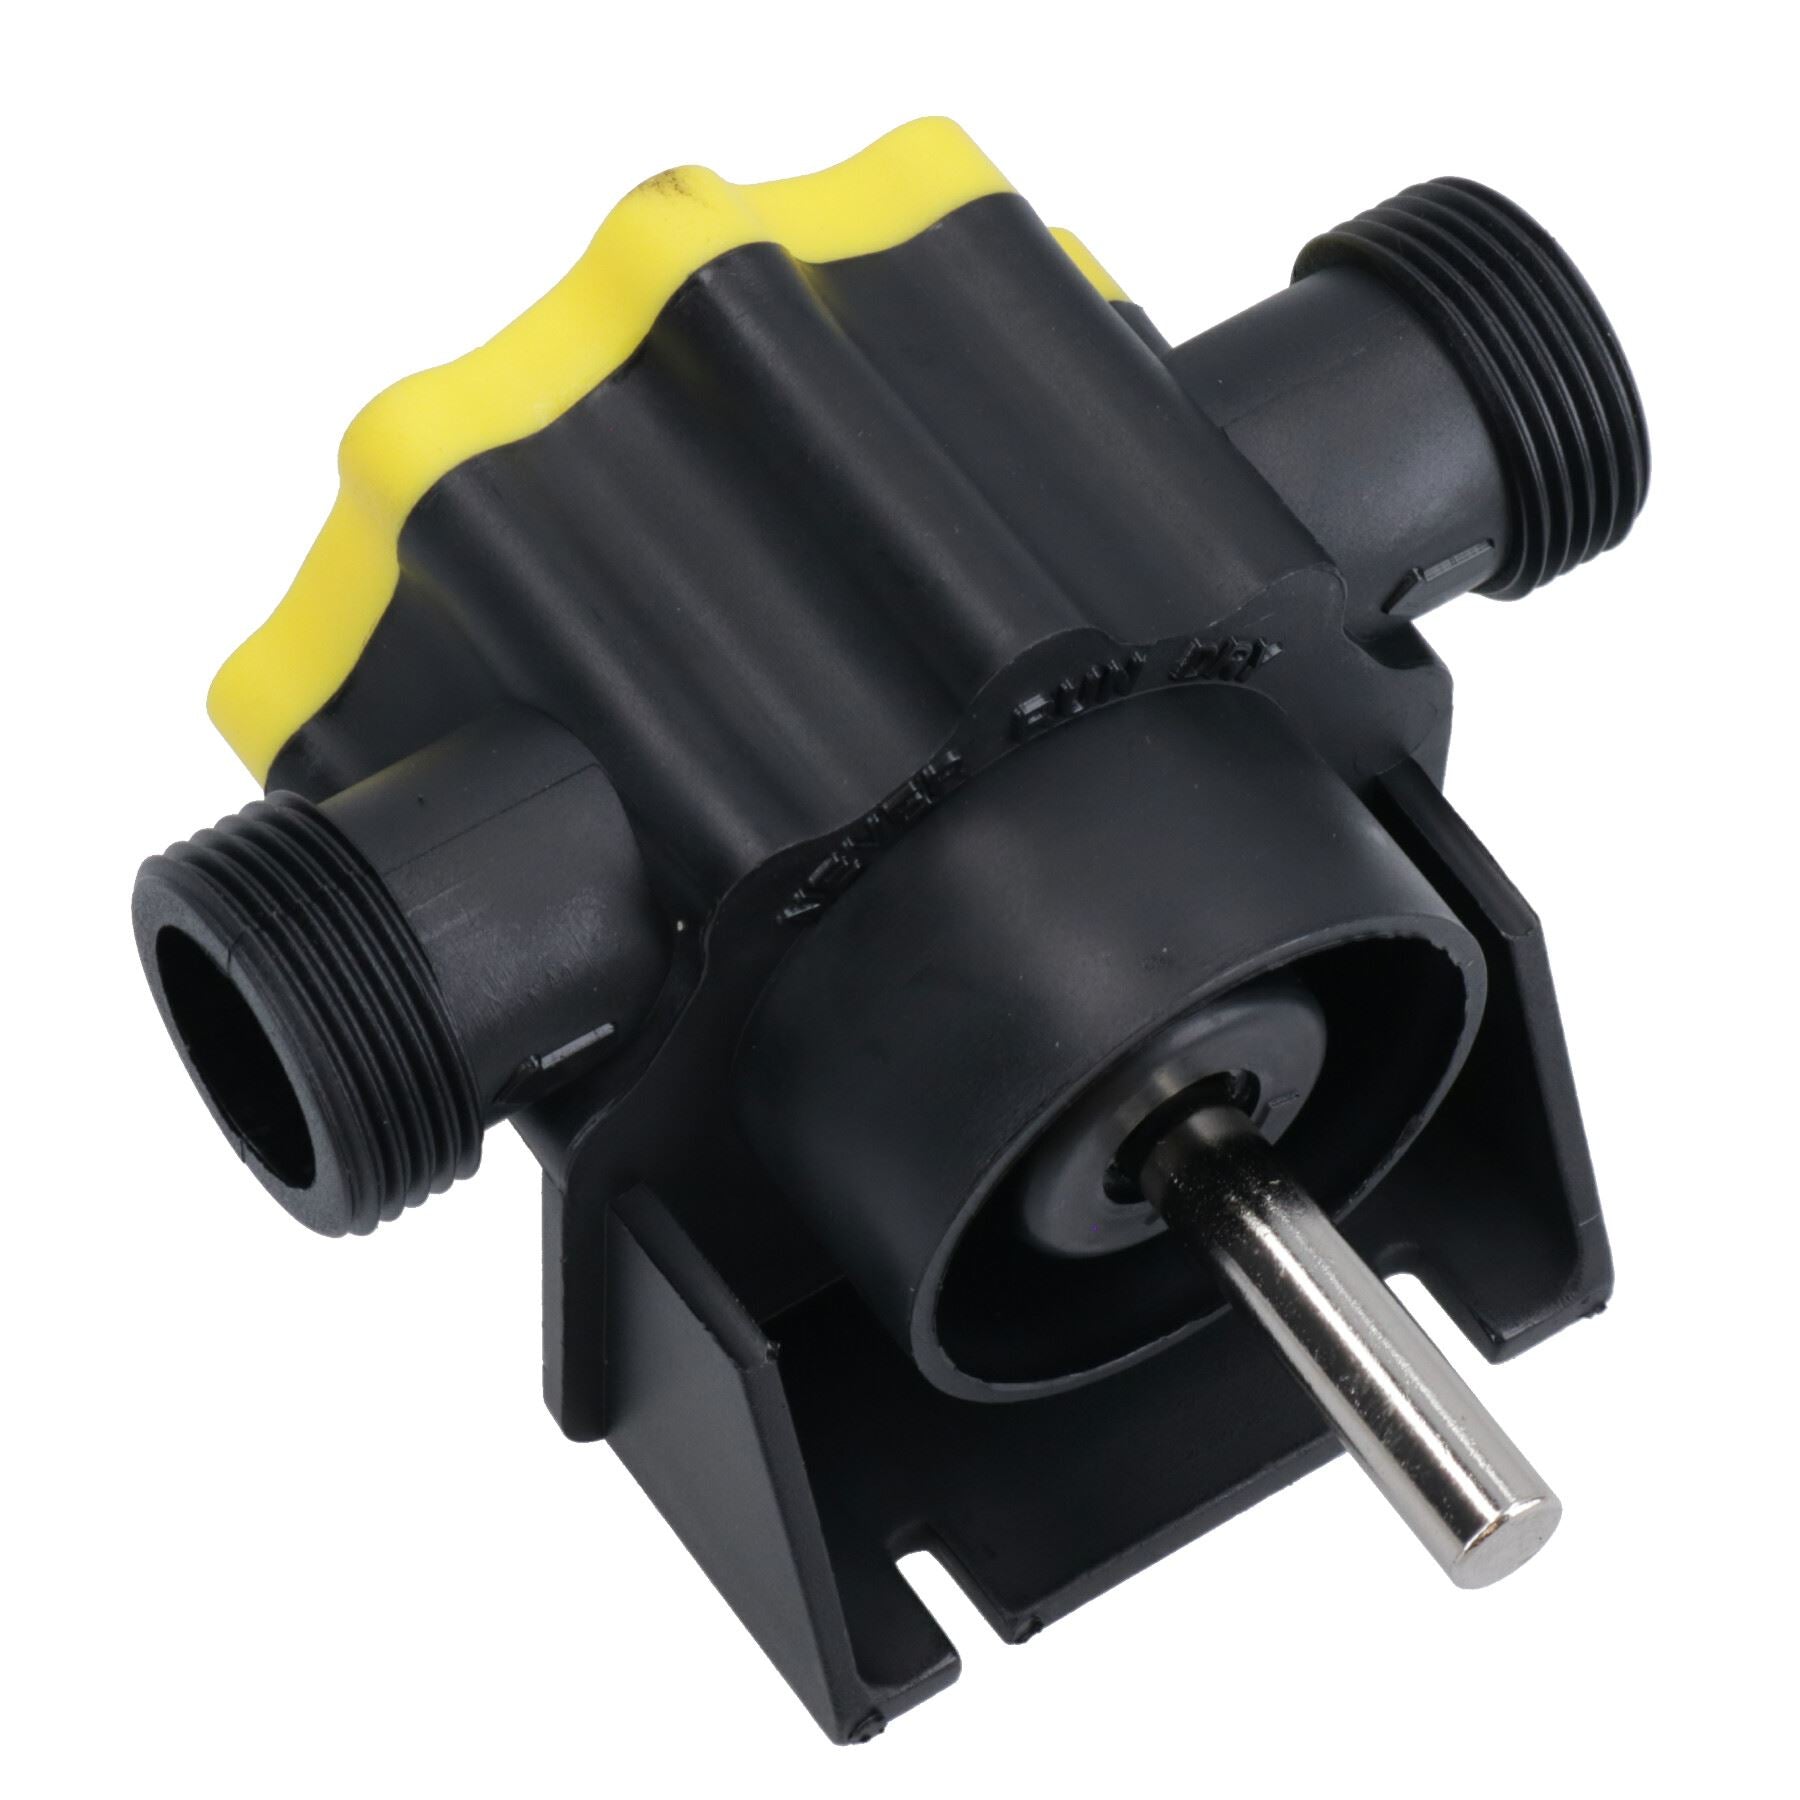 Drill Pump Suitable for Oil & Fluids Diesel, Kerosene, Water TE456